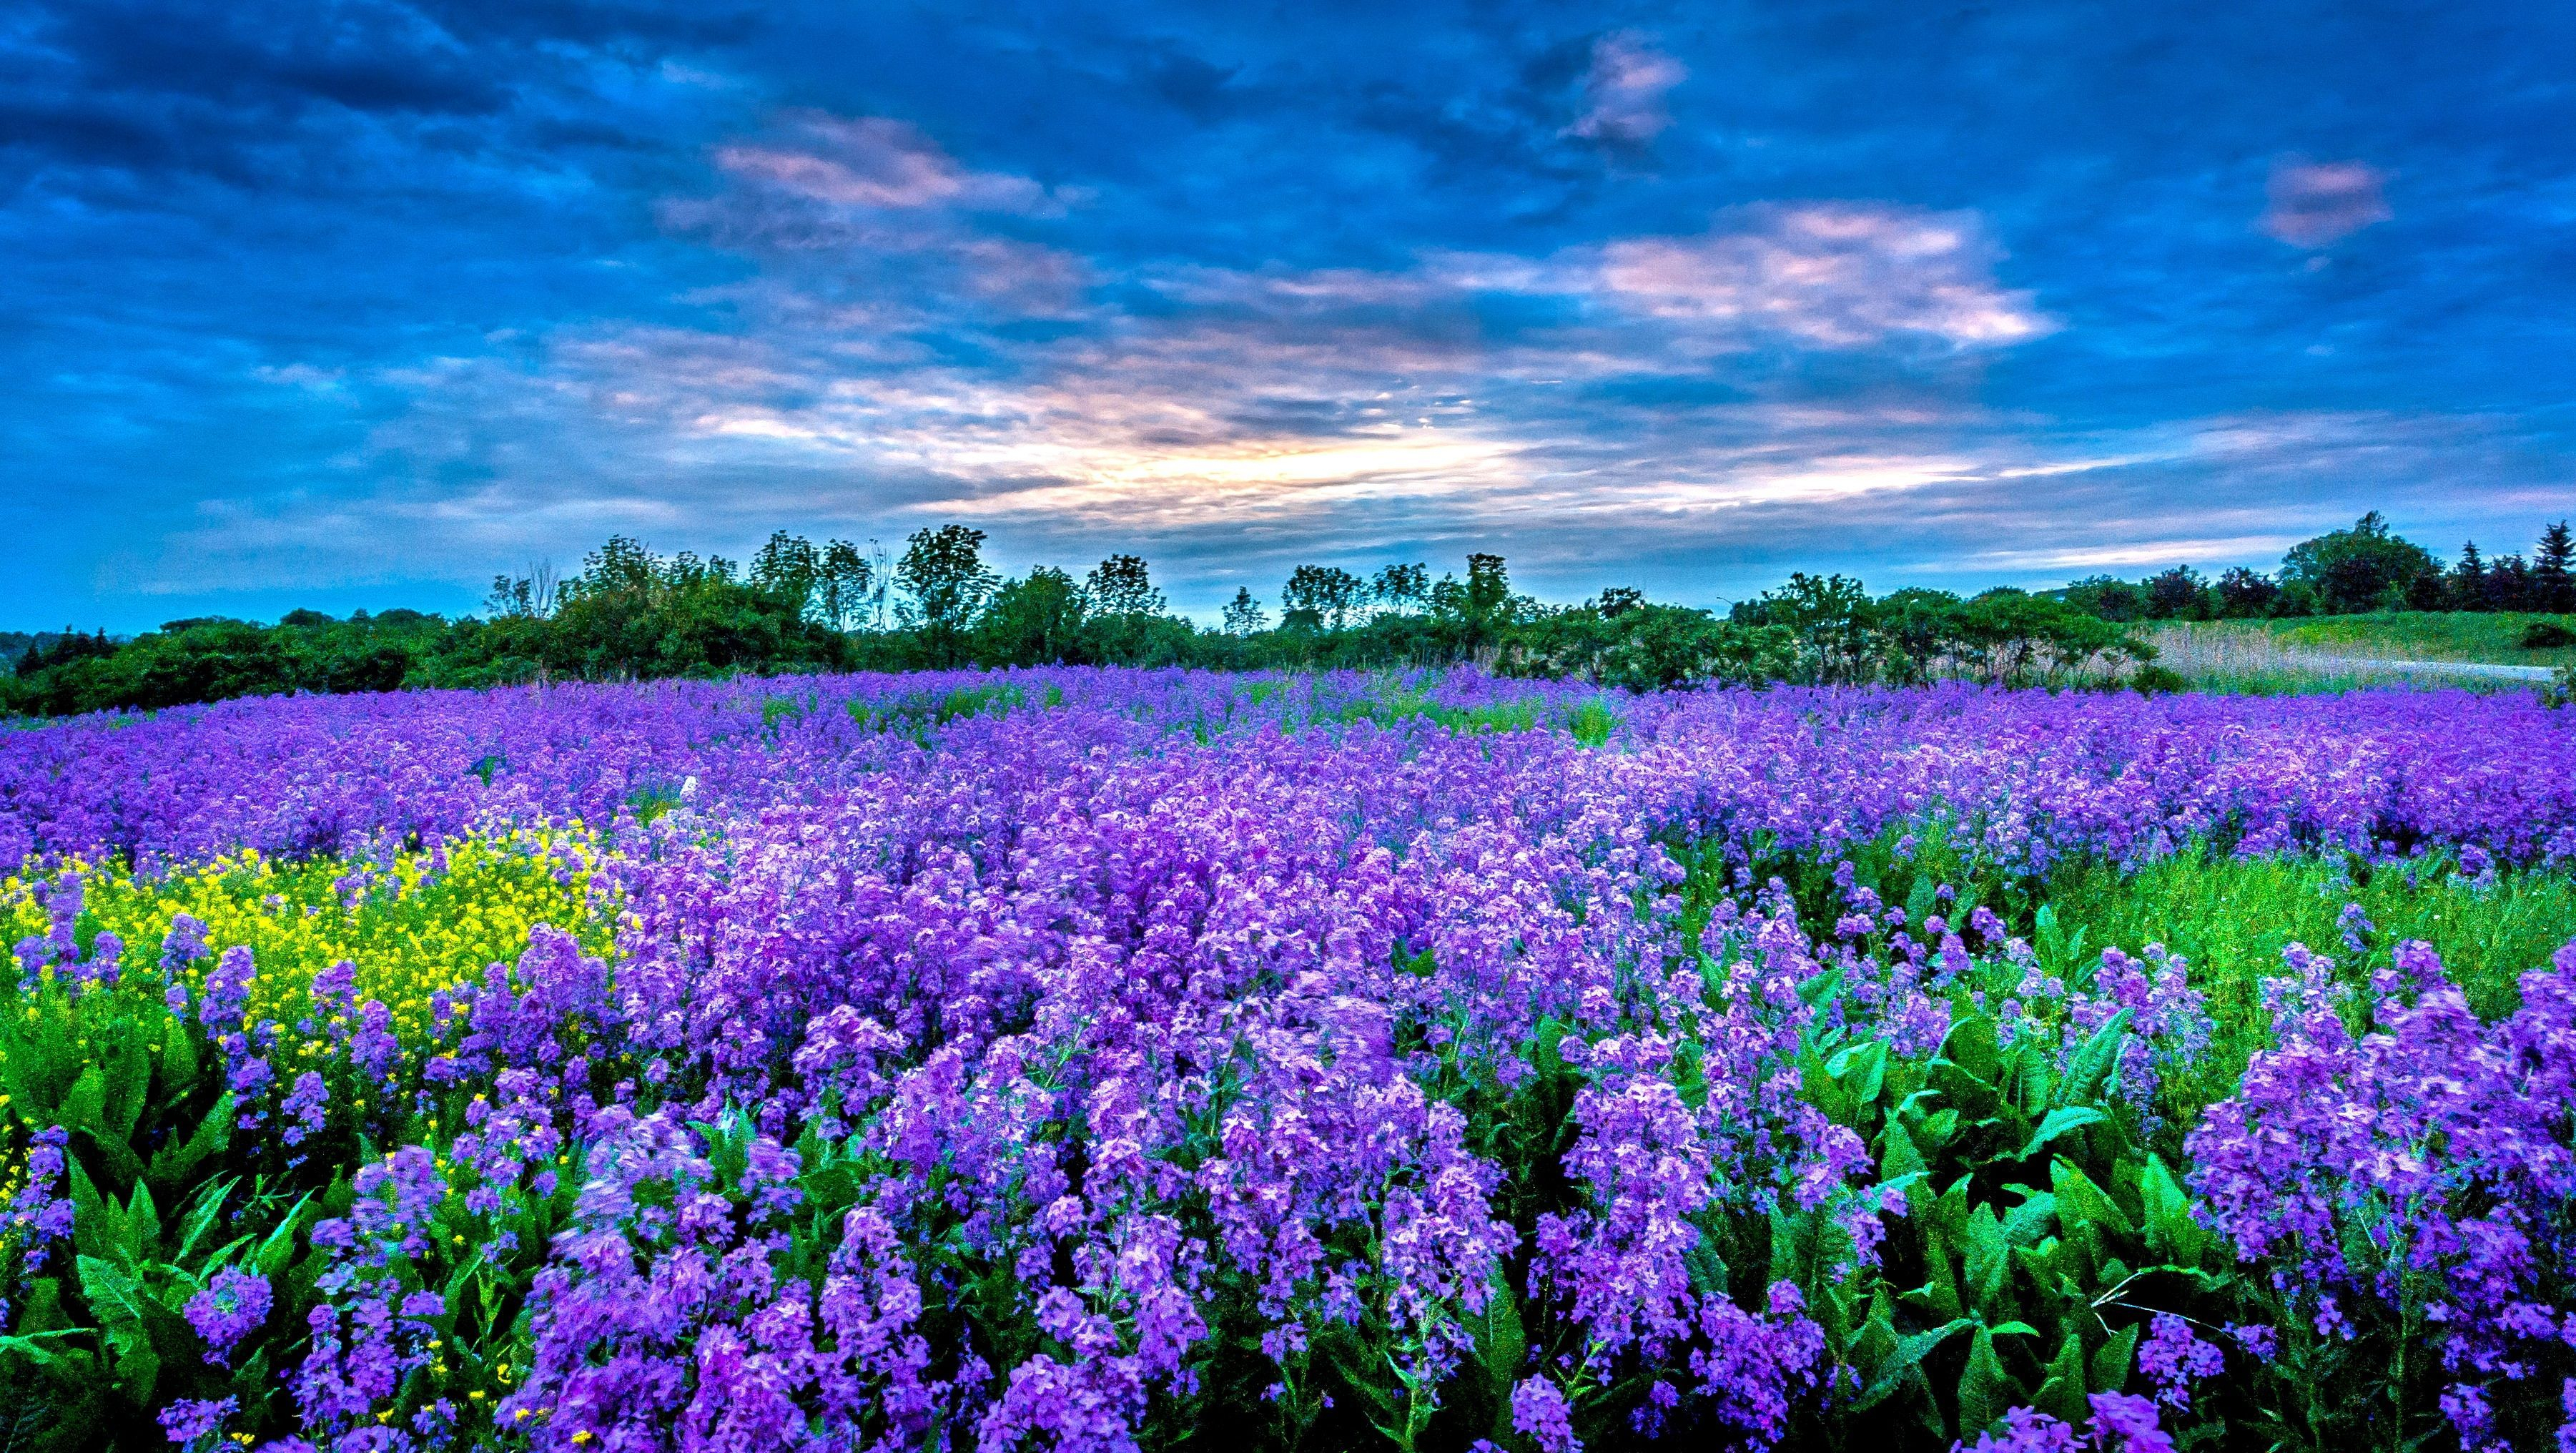 3603x2032 Picture of field of purple flowers Google Search | Flower field, Landscape, Purple flowers wallpaper